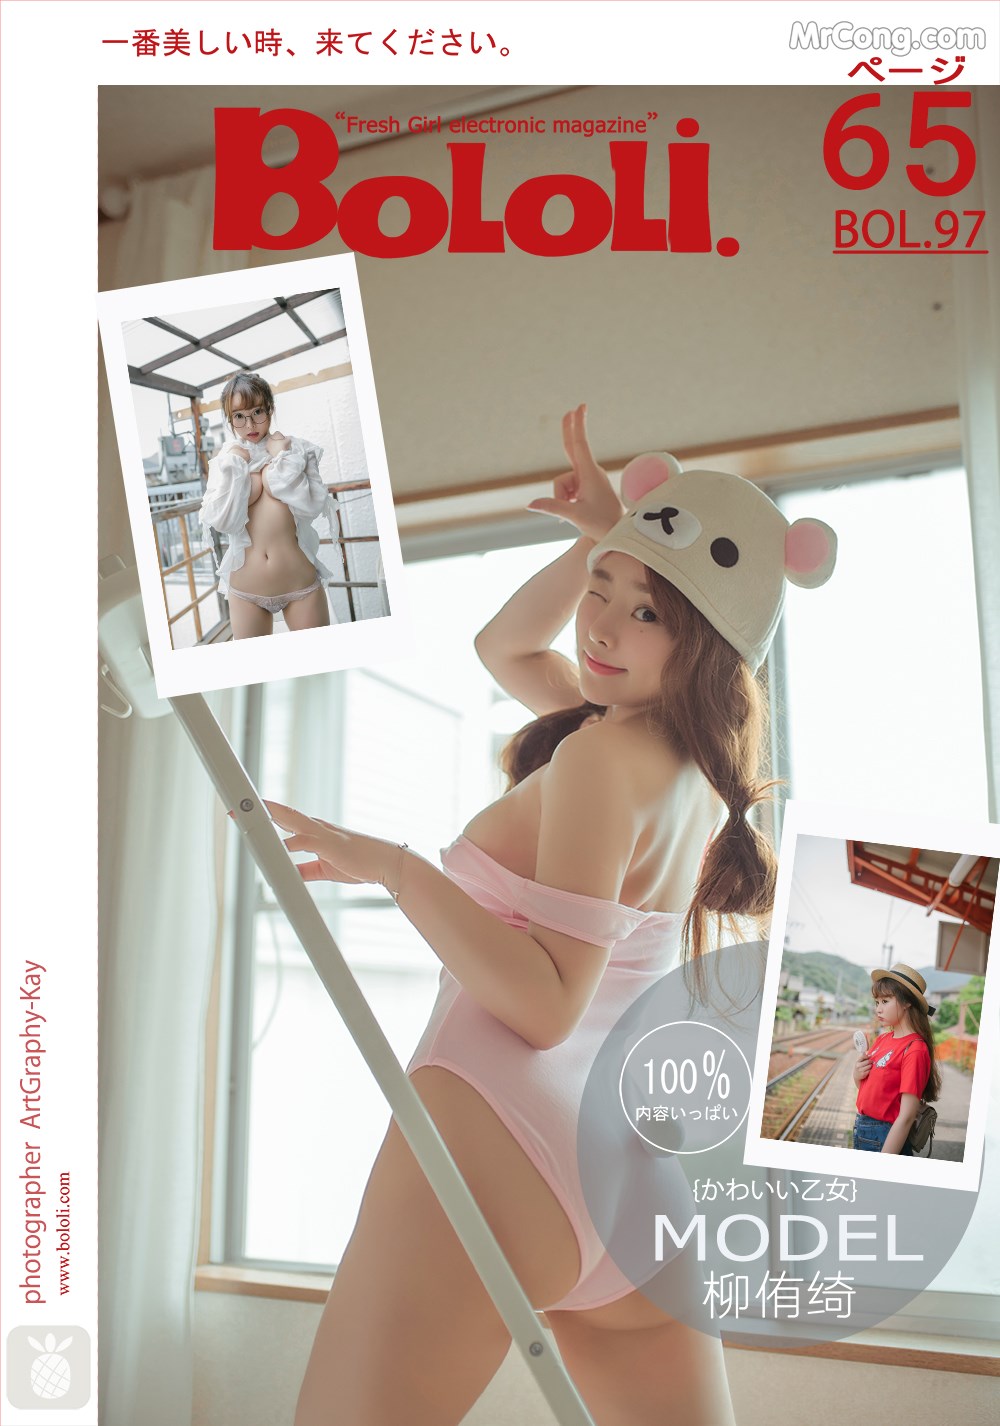 BoLoli 2017-08-06 Vol.097: Model Liu You Qi Sevenbaby (柳 侑 绮 Sevenbaby) (66 photos)